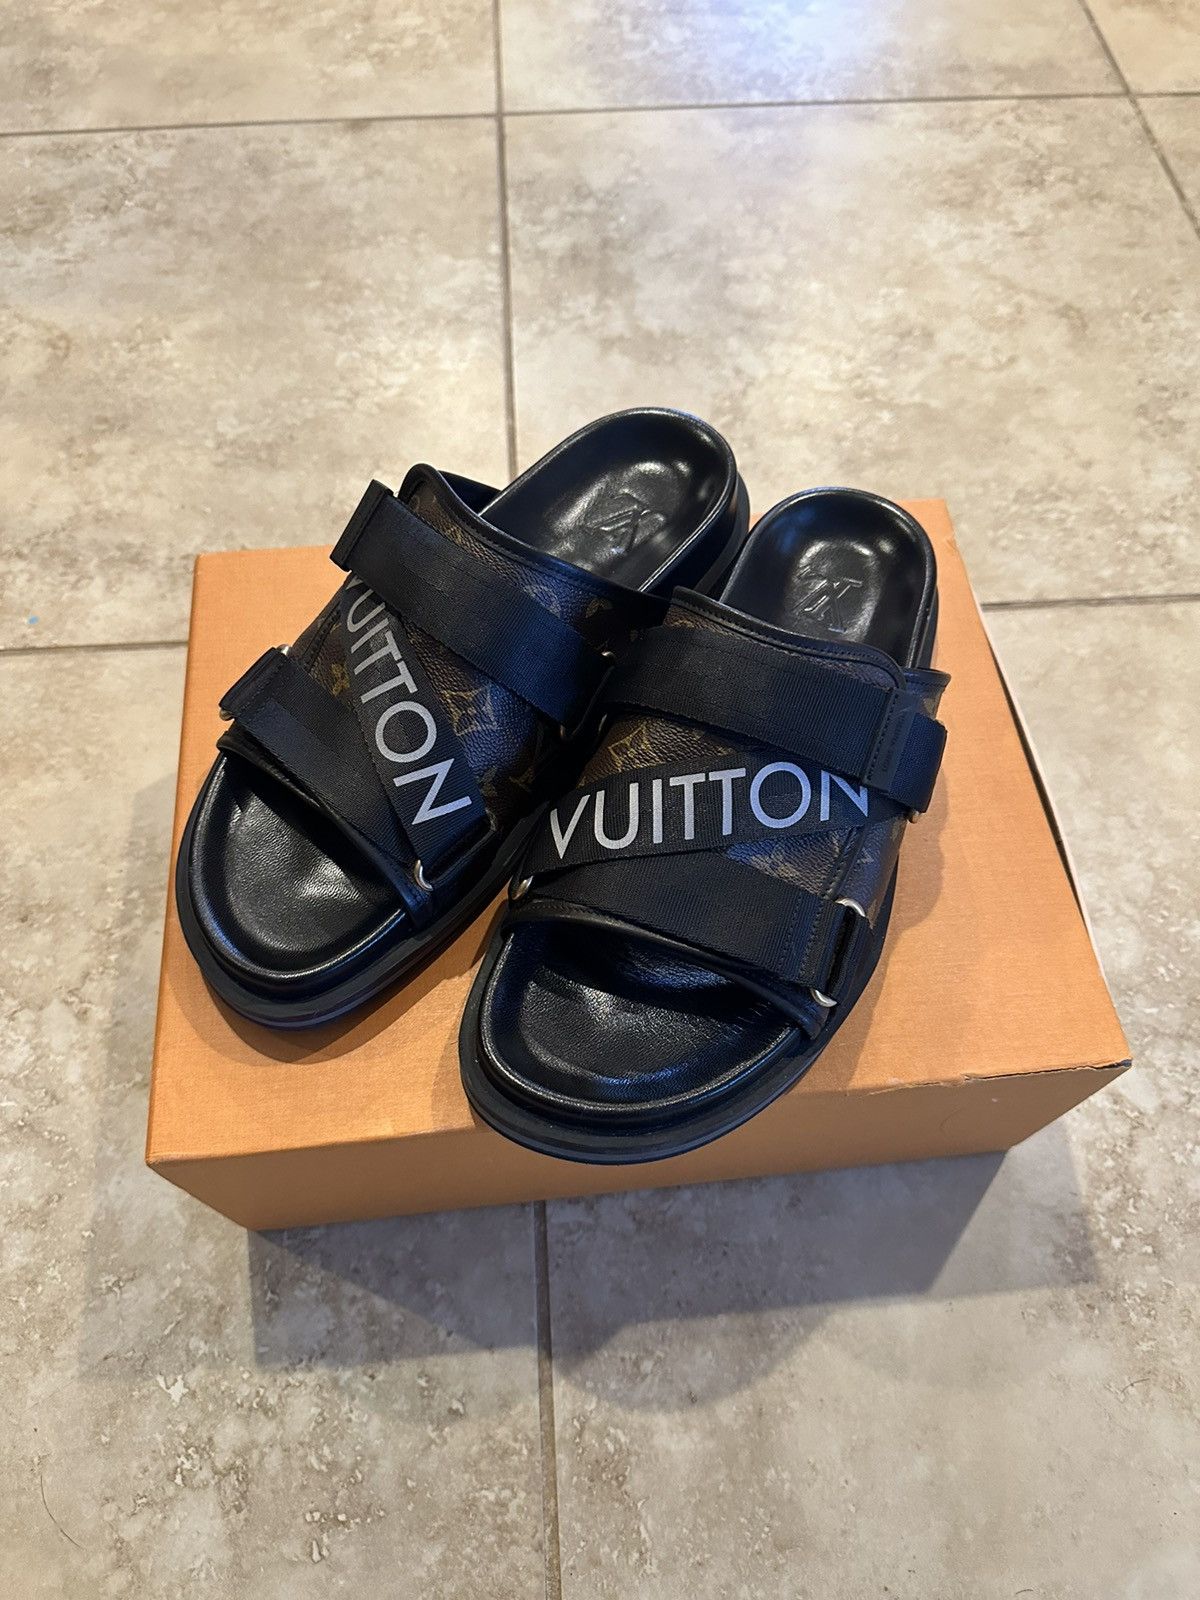 Louis Vuitton Honolulu Sandal In Black And Dark Blue - Praise To